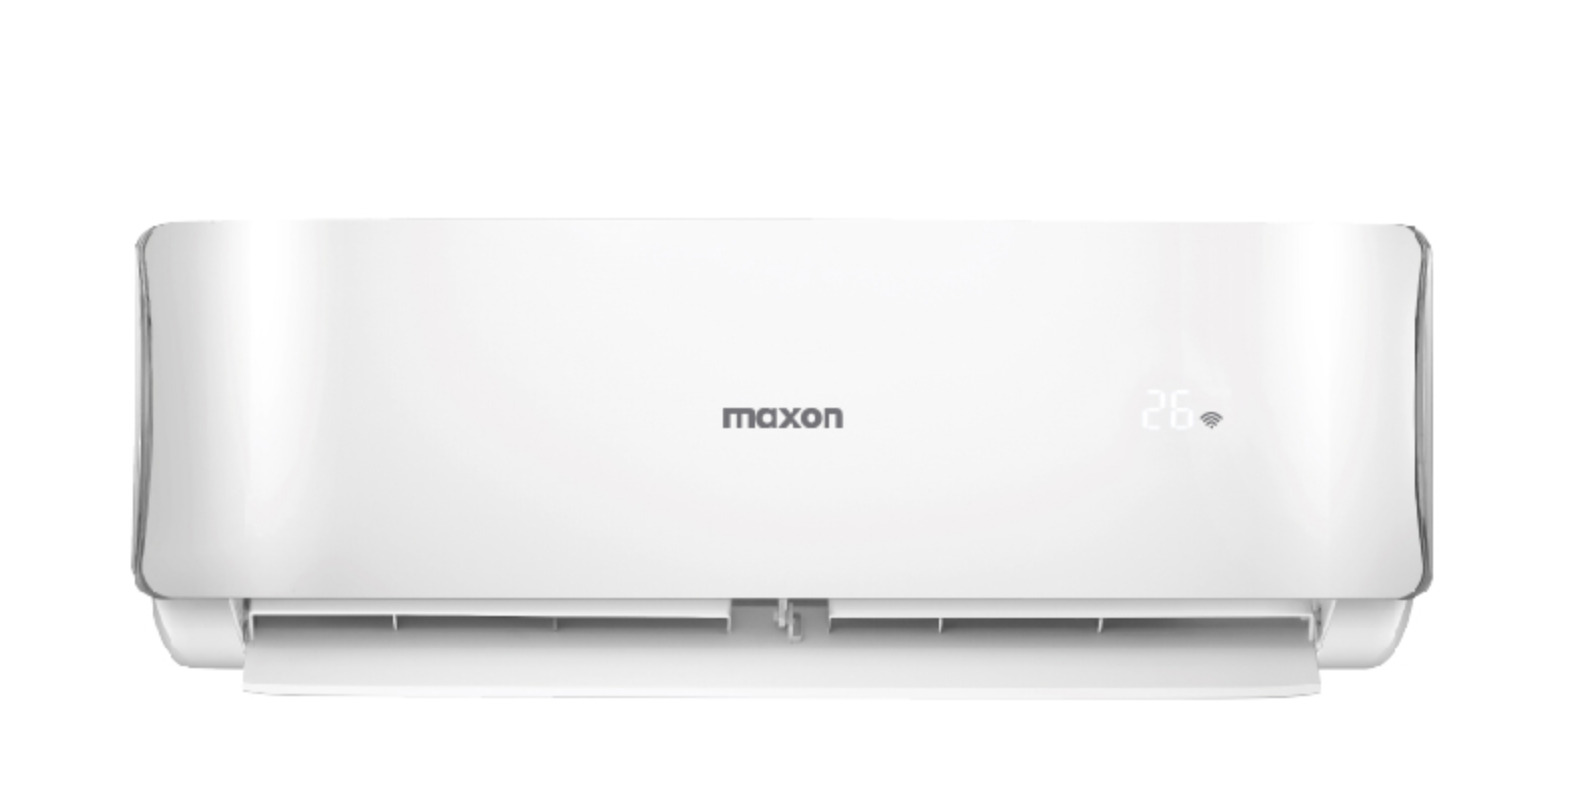 maxon-klima-za-grijanje-wifi